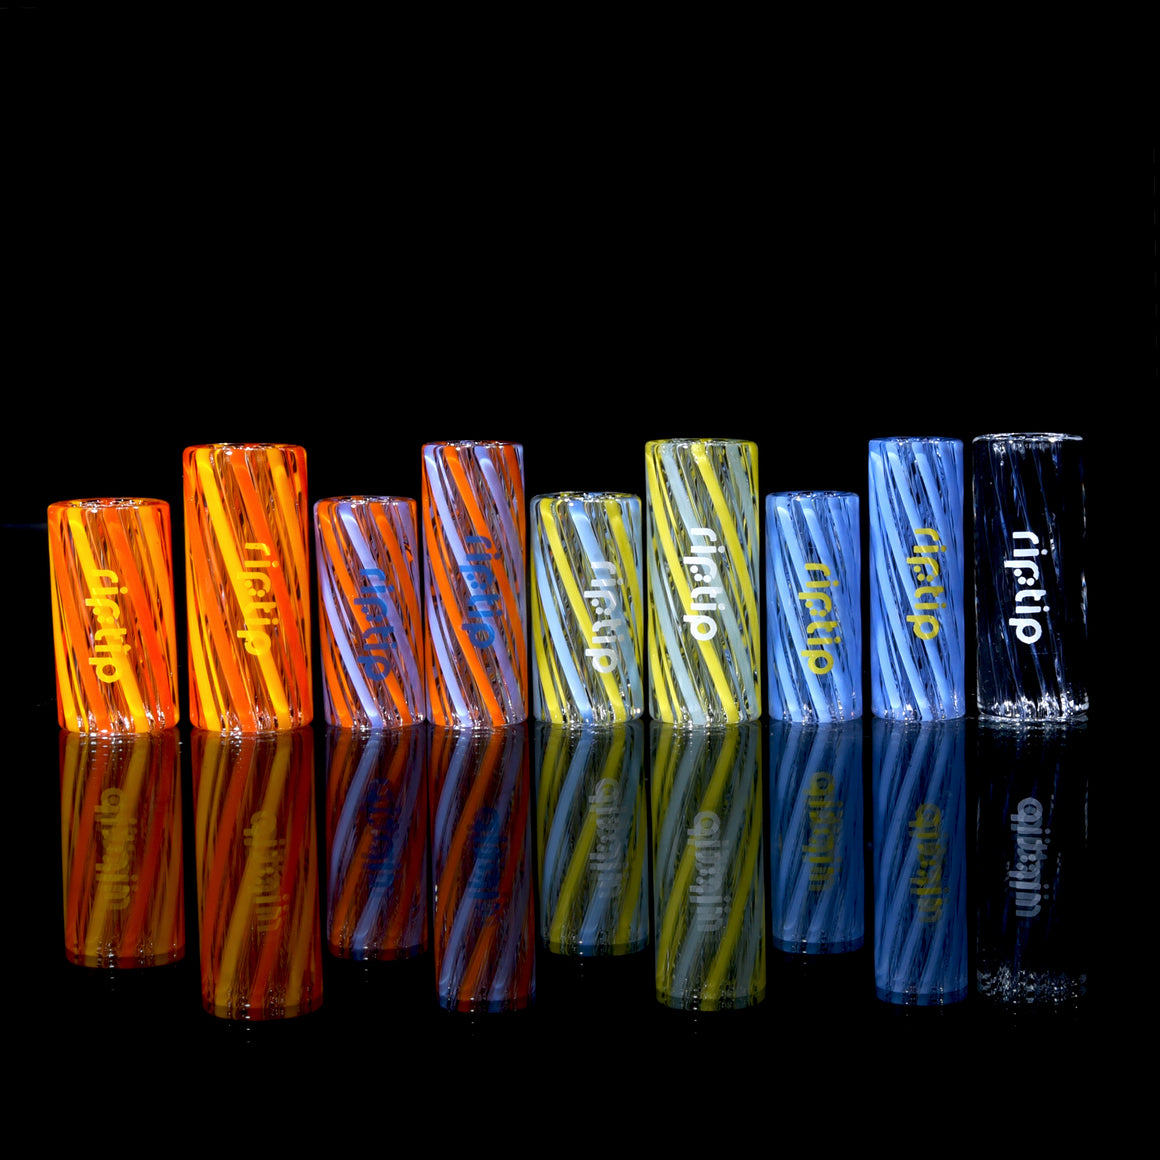 13mm XXL Extra Long RipTip Filter Tips for Blunts, Joints, etc. - Citrus Orange